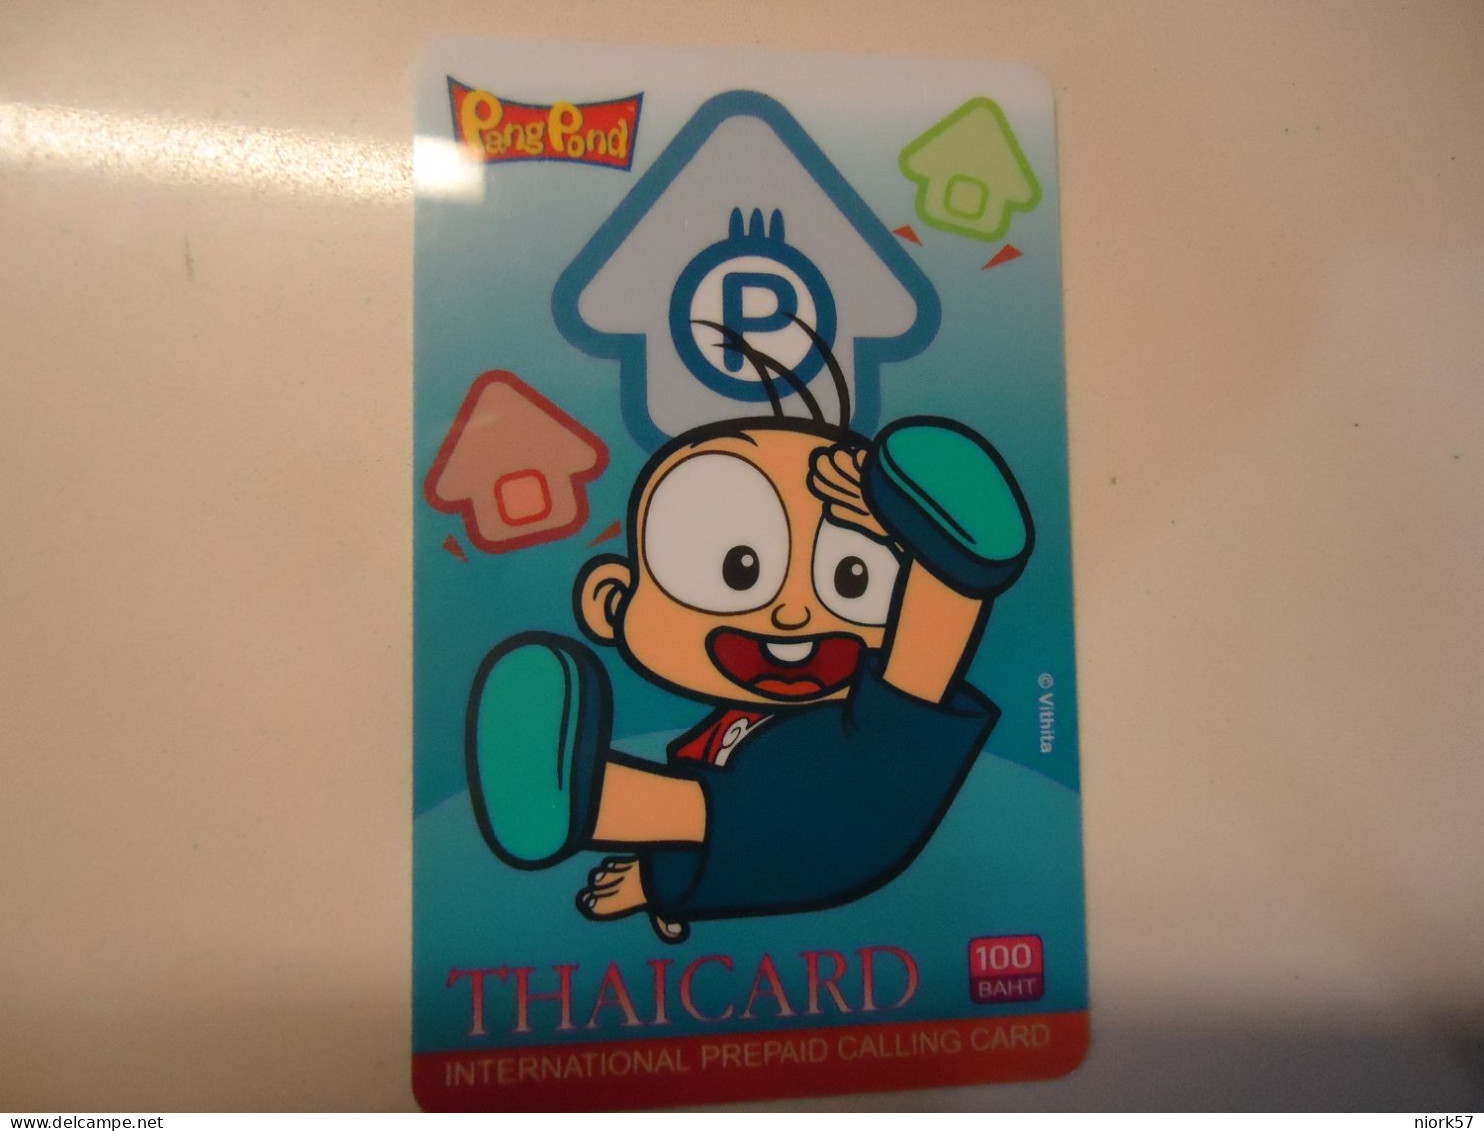 THAILAND    USED THAICARDS DISNEY COMICS  PONGPONG - Disney